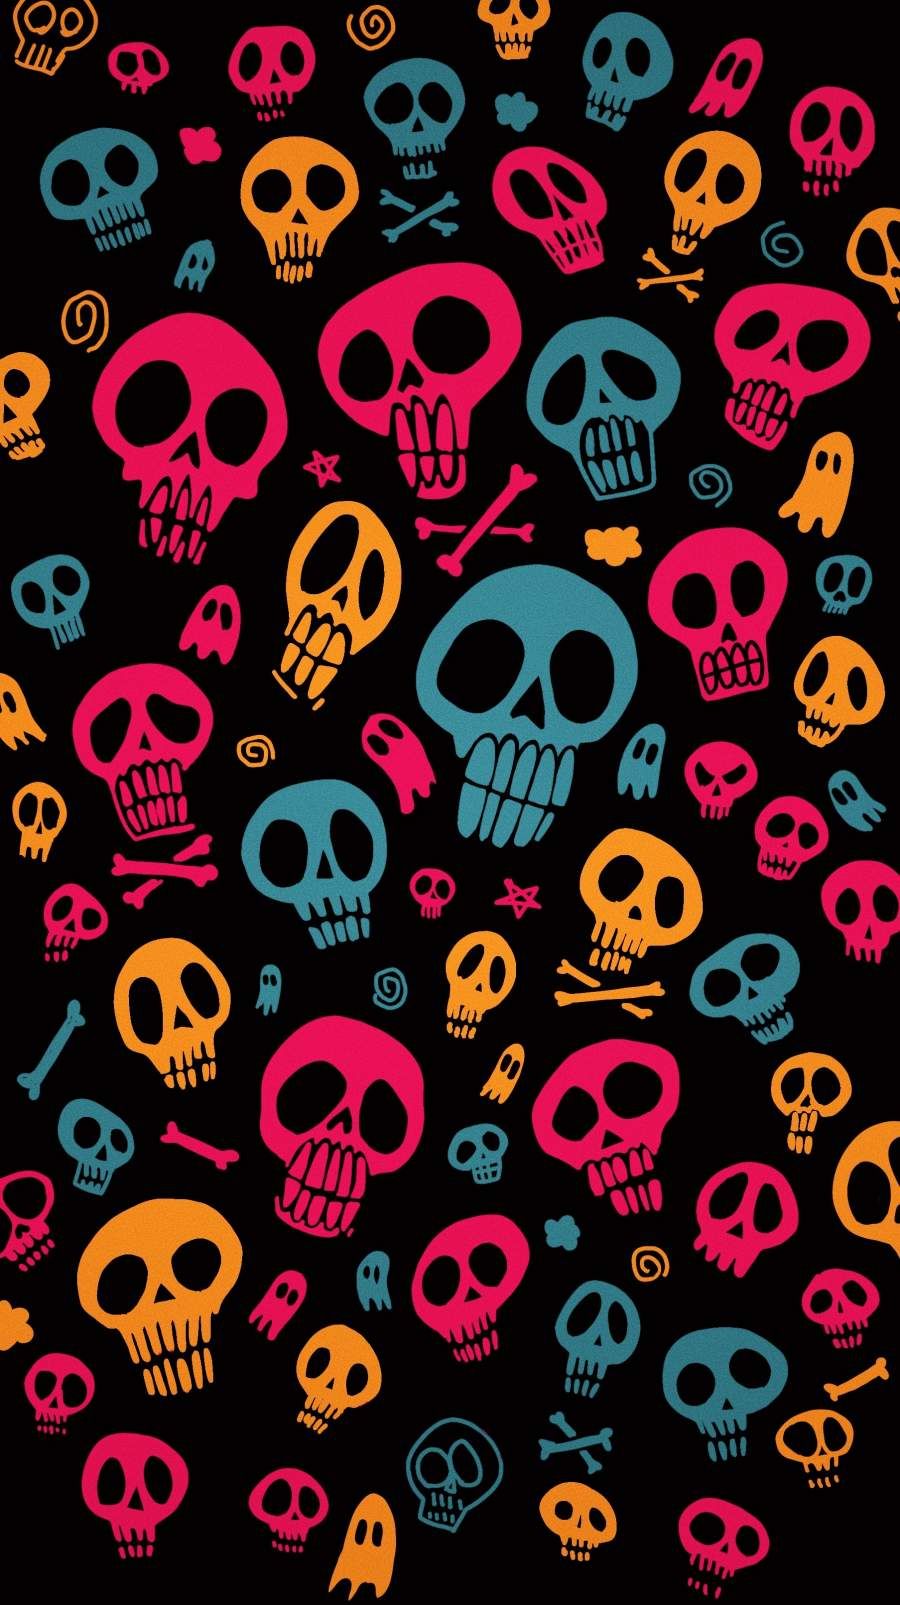 Halloween Skulls iPhone Wallpaper. Skull wallpaper, Black skulls wallpaper, iPhone wallpaper image